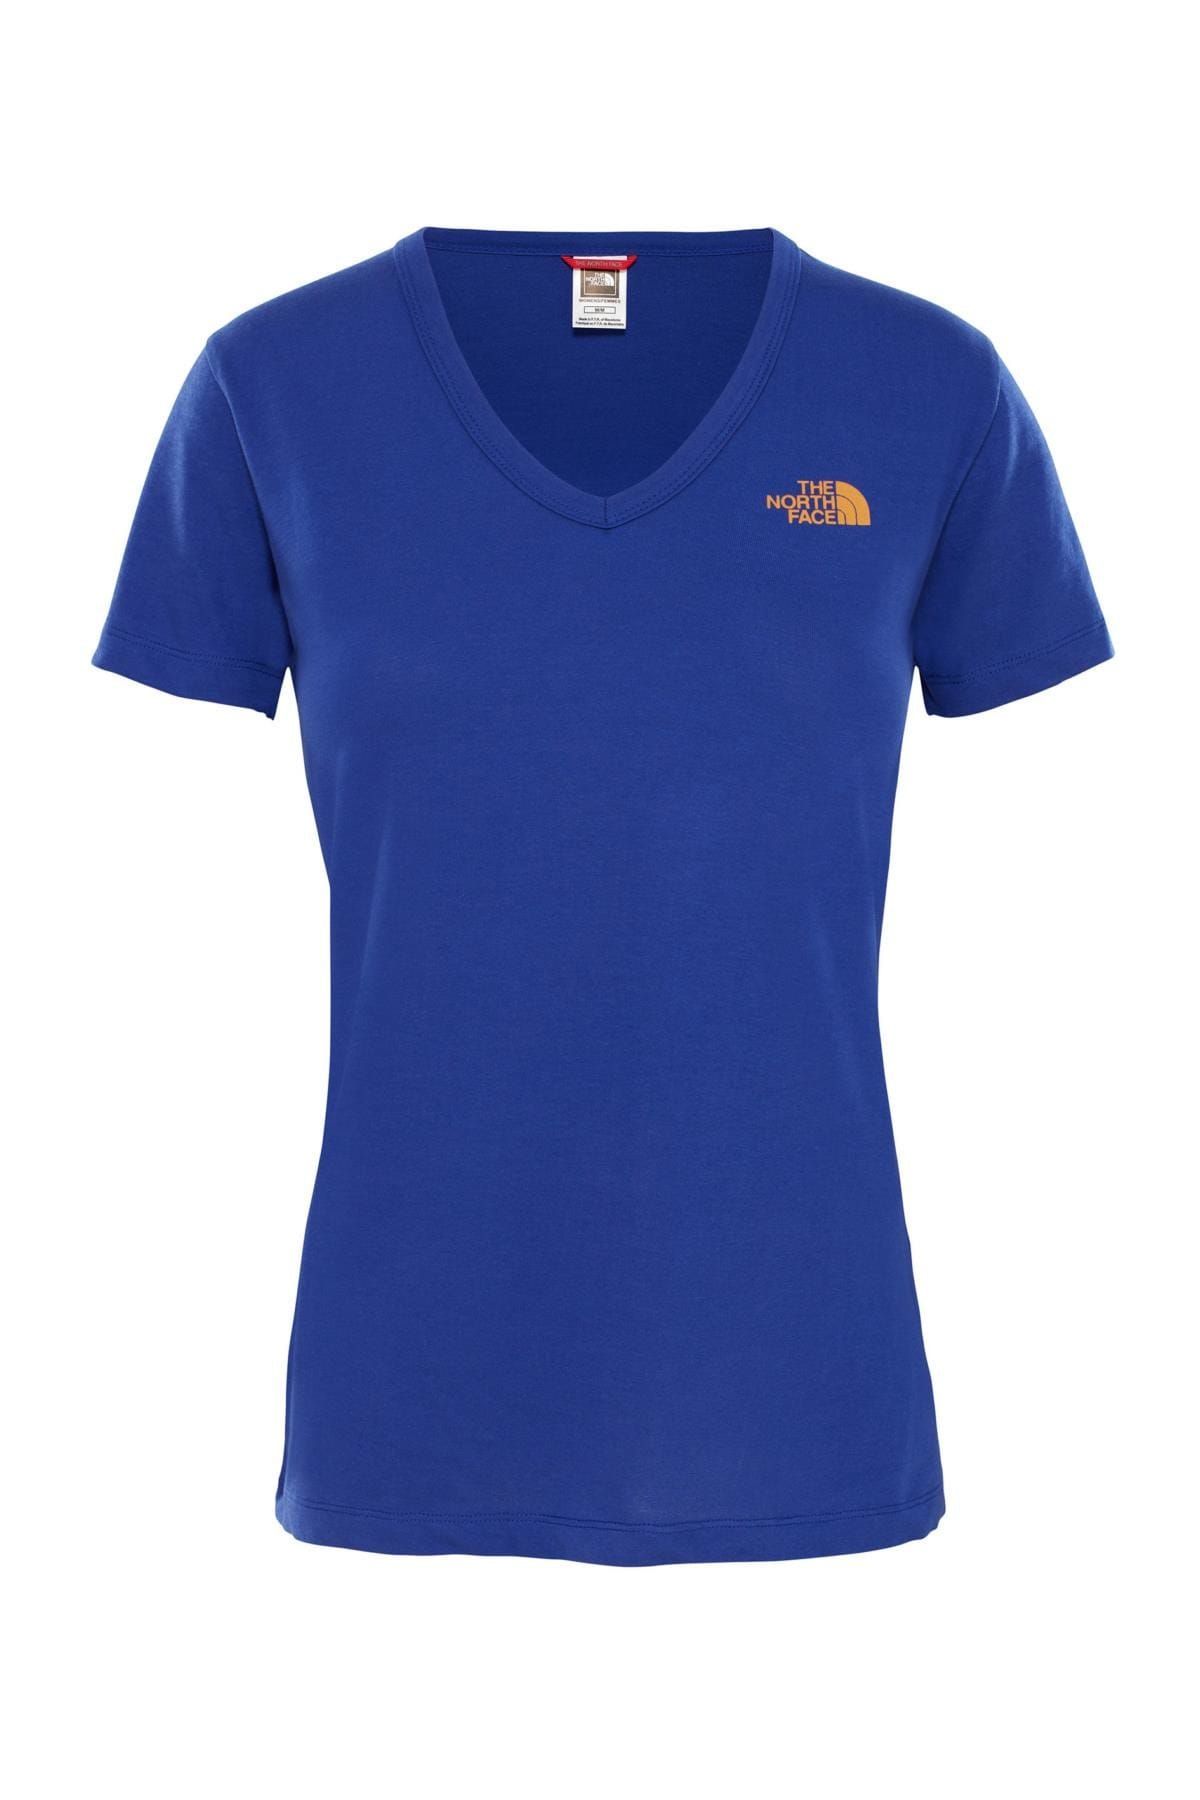 The North Face - W S/S Simple Dome Tee Kadın T-Shirt Mavi